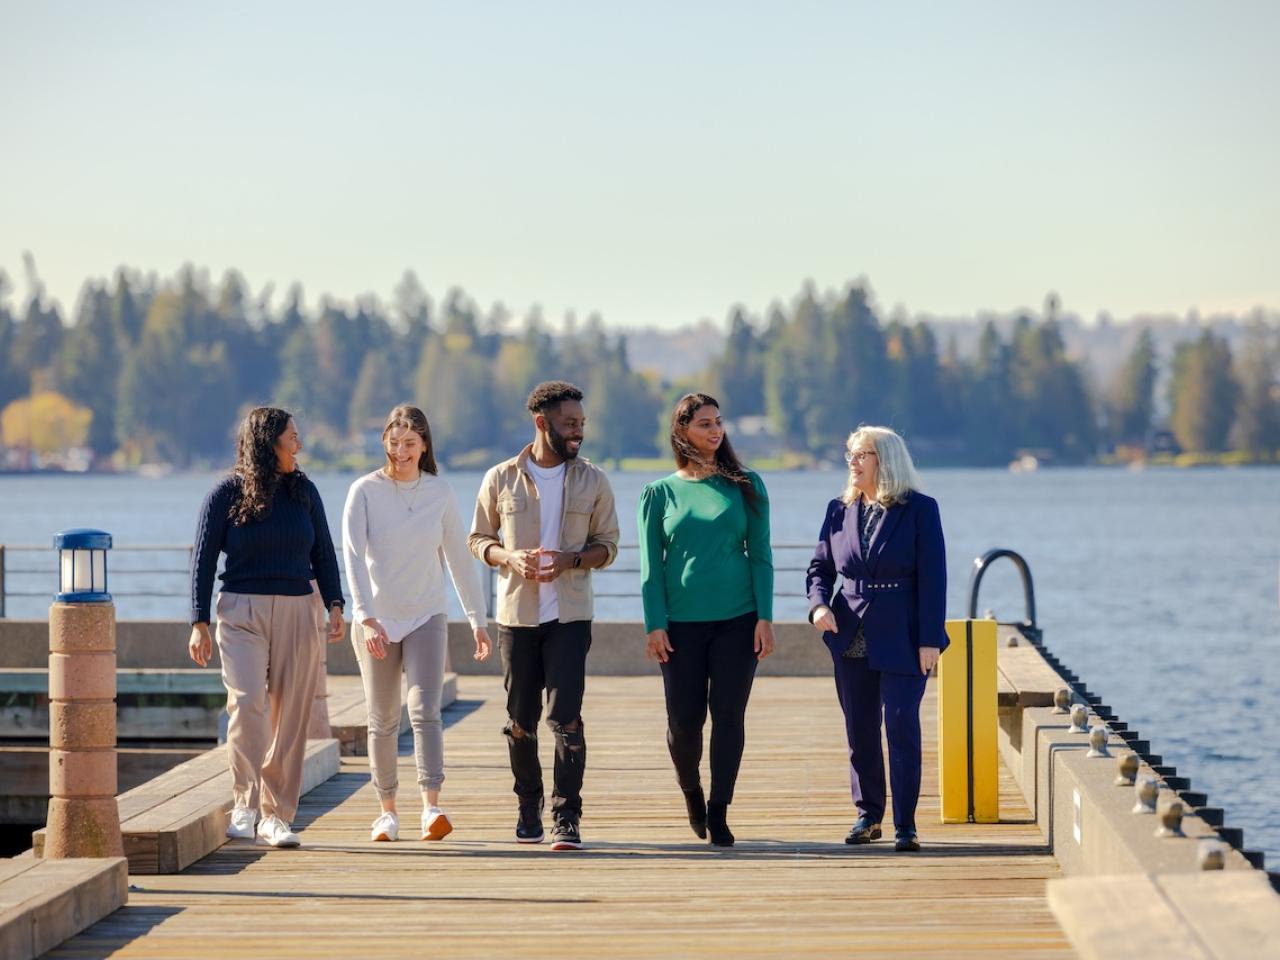 Group of GoDaddy employees walking along a pier.